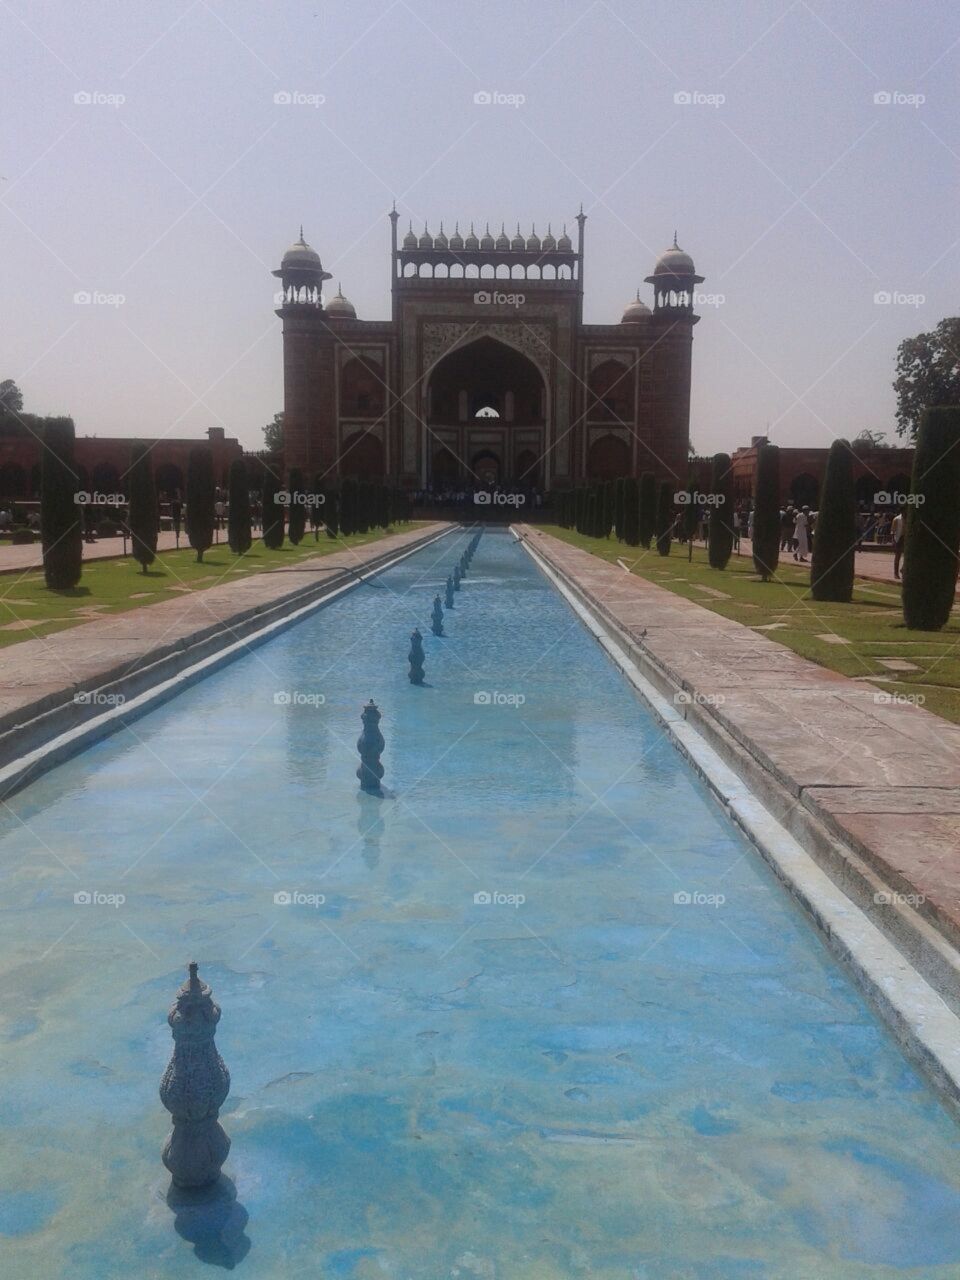 Tai mahal fountain . Looking back to the gate and fountain at the Taj Mahal India 